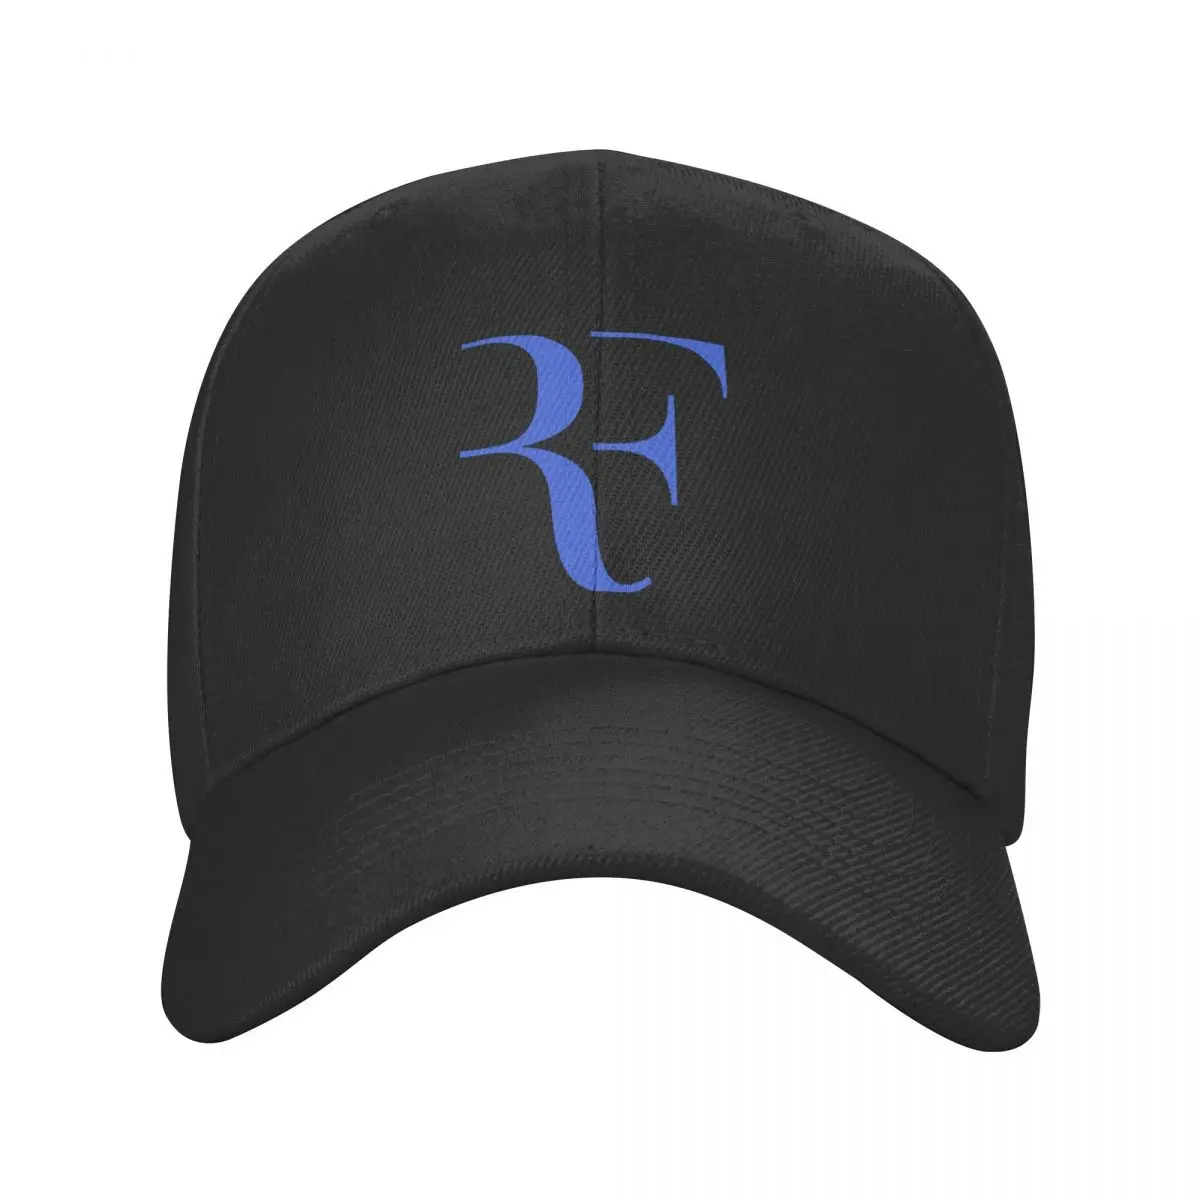 Cool Blue Federer Tennis Stars Trucker Hat Women Men Personalized Adjustable Unisex Baseball Cap Hip Hop